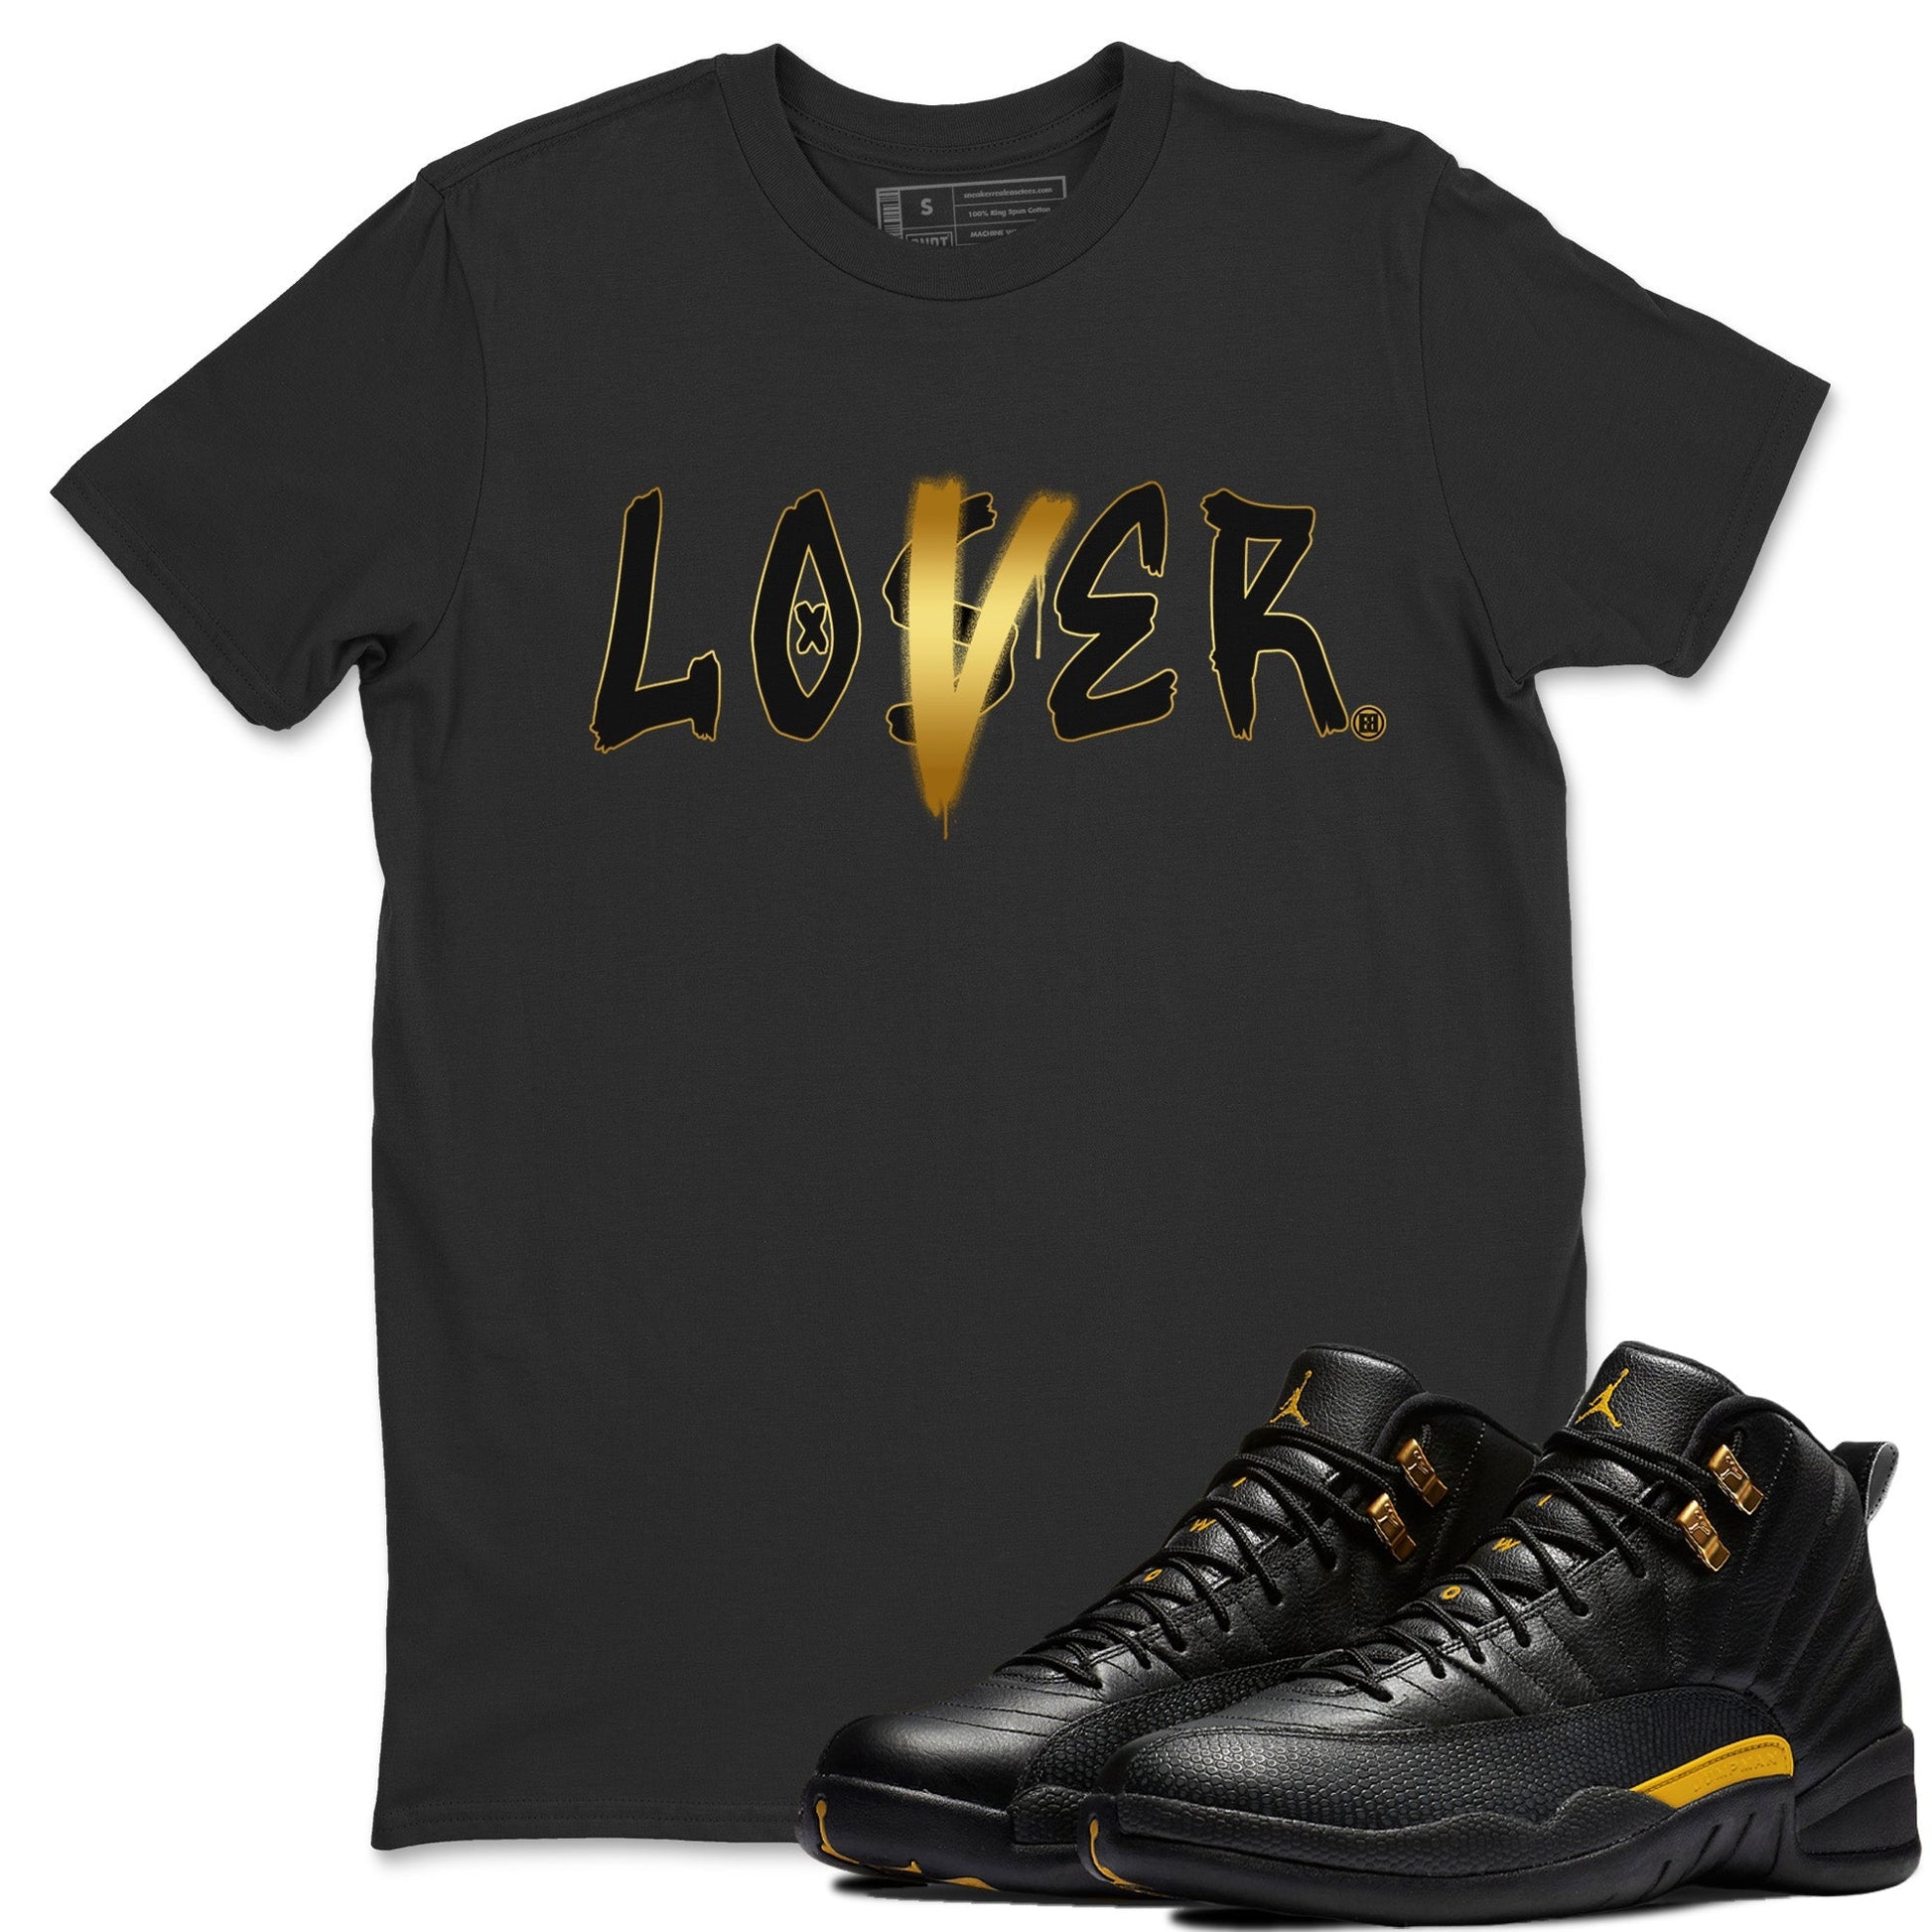 Jordan 12 Black Taxi Sneaker Match Tees Loser Lover Sneaker Tees Jordan 12 Black Taxi Sneaker Release Tees Unisex Shirts